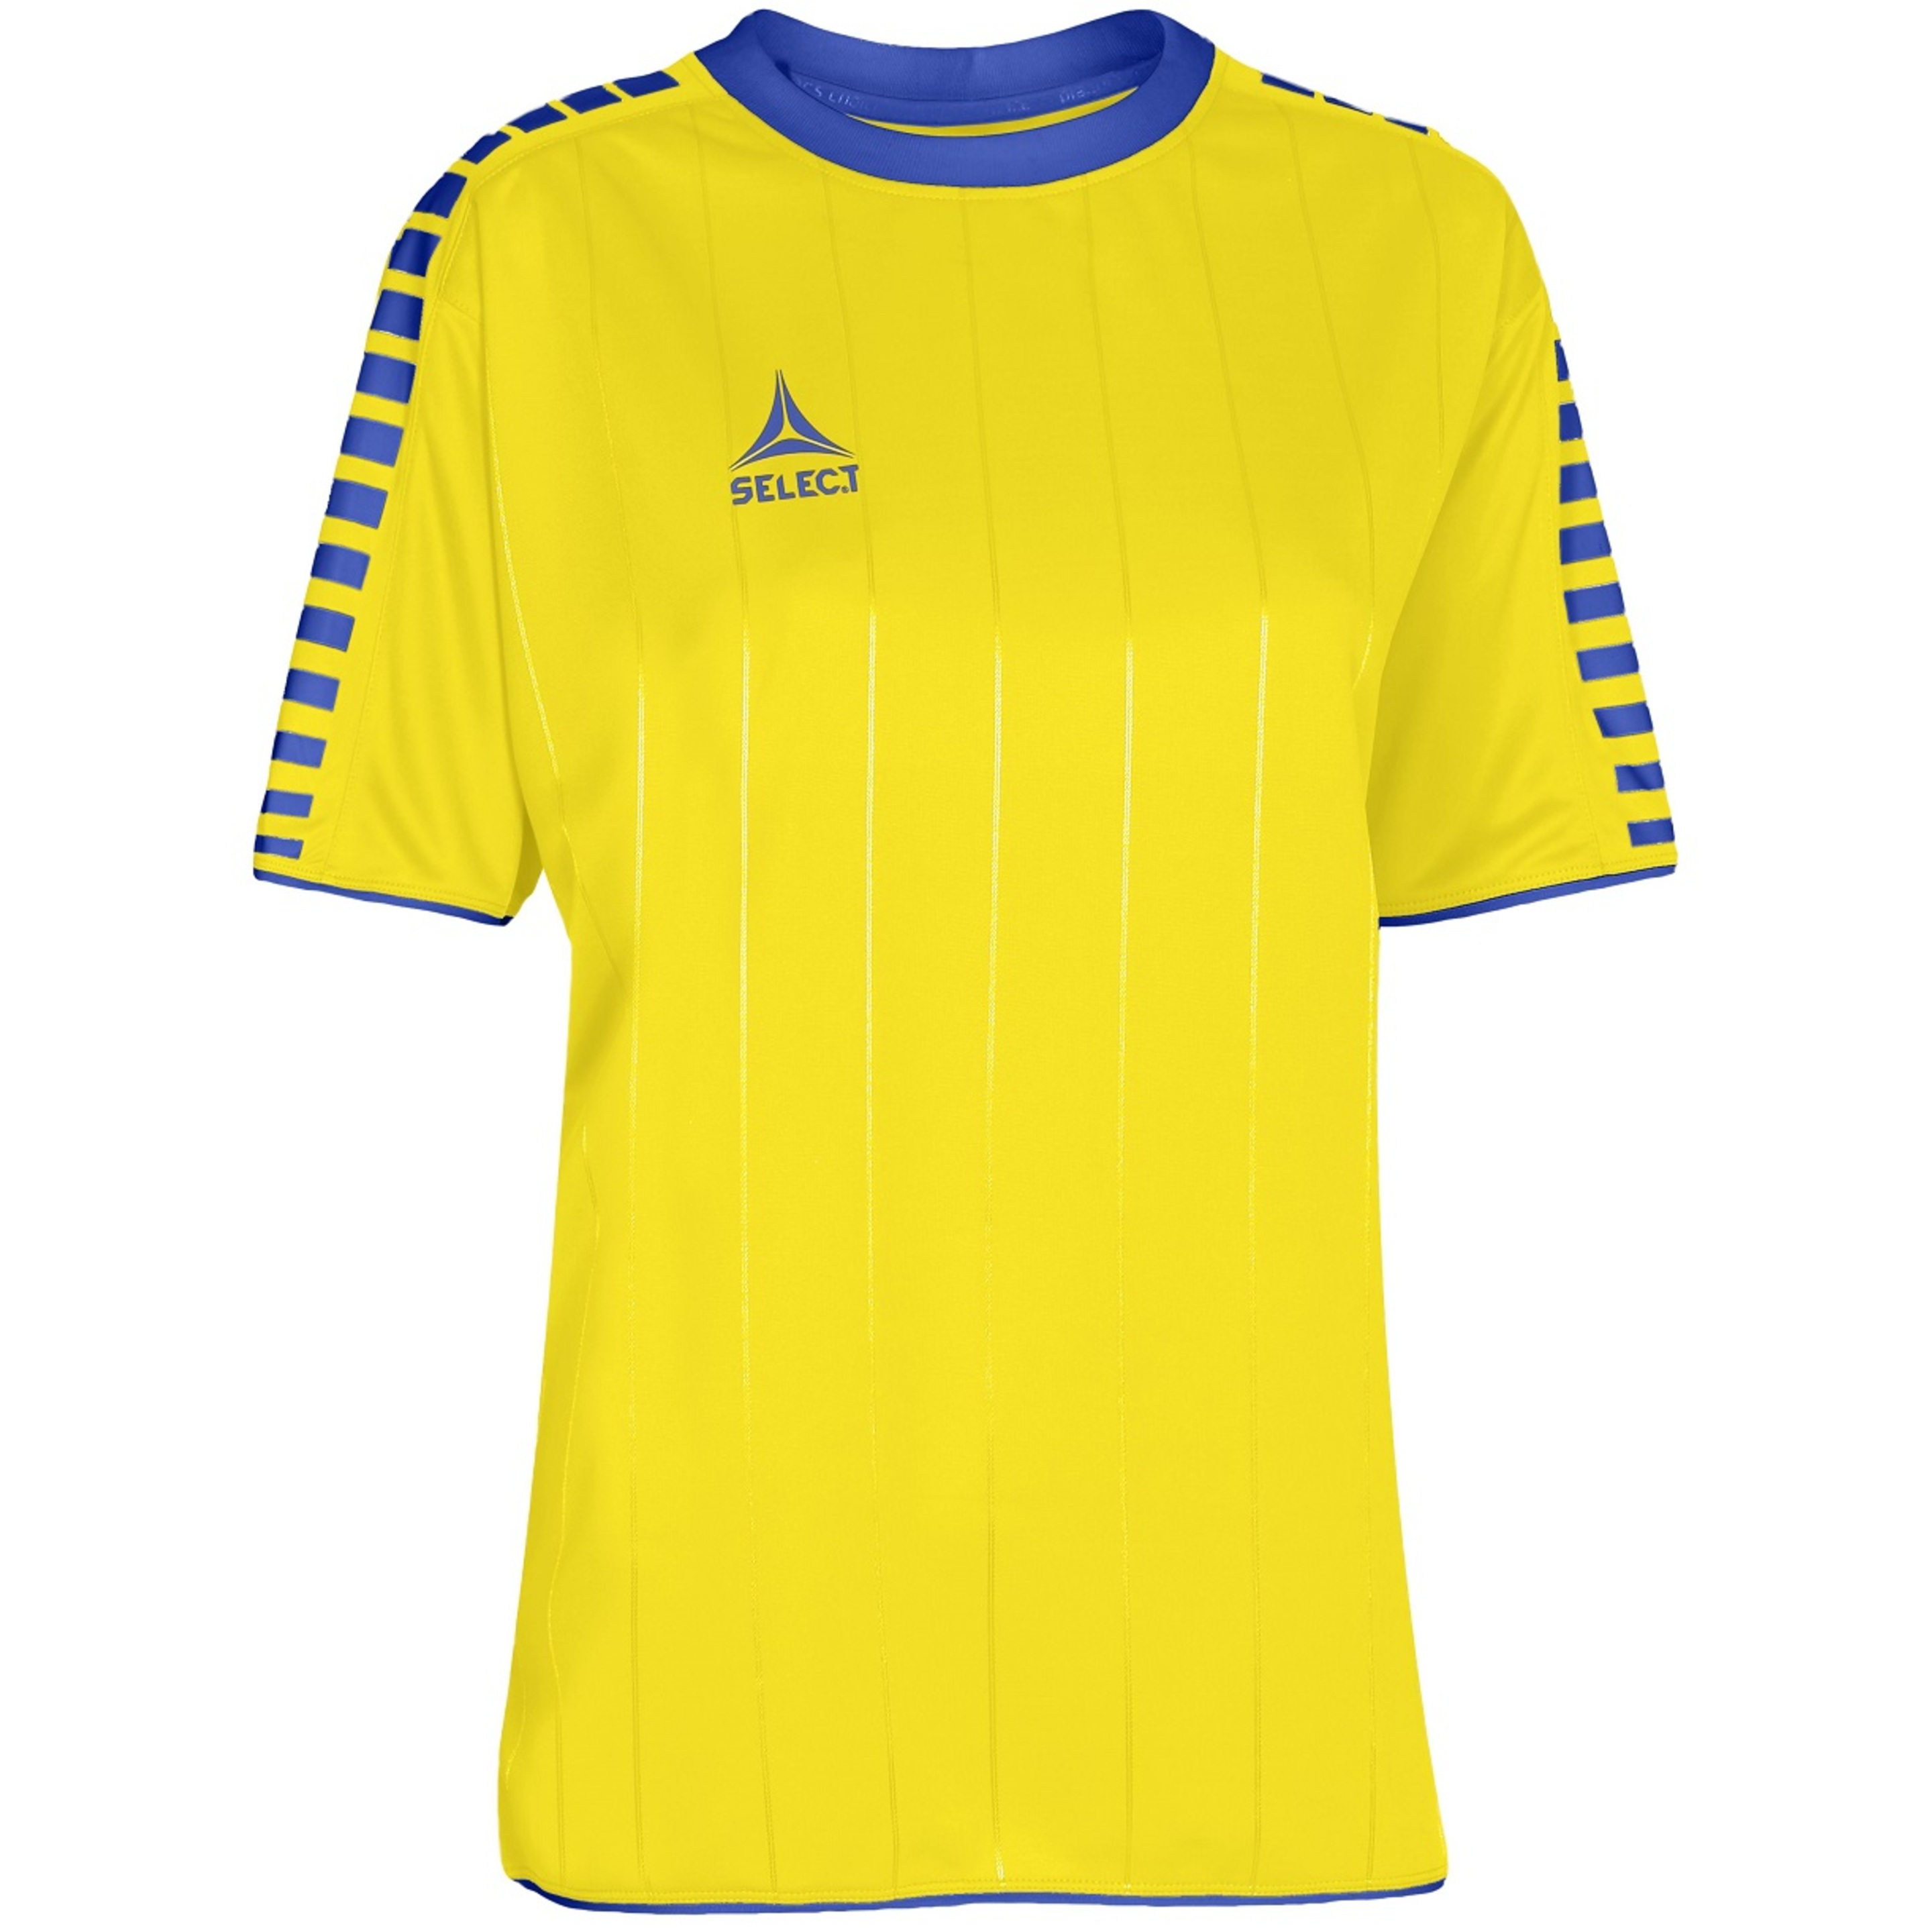 Camiseta De Mujer Select Argentina - amarillo-azul - 